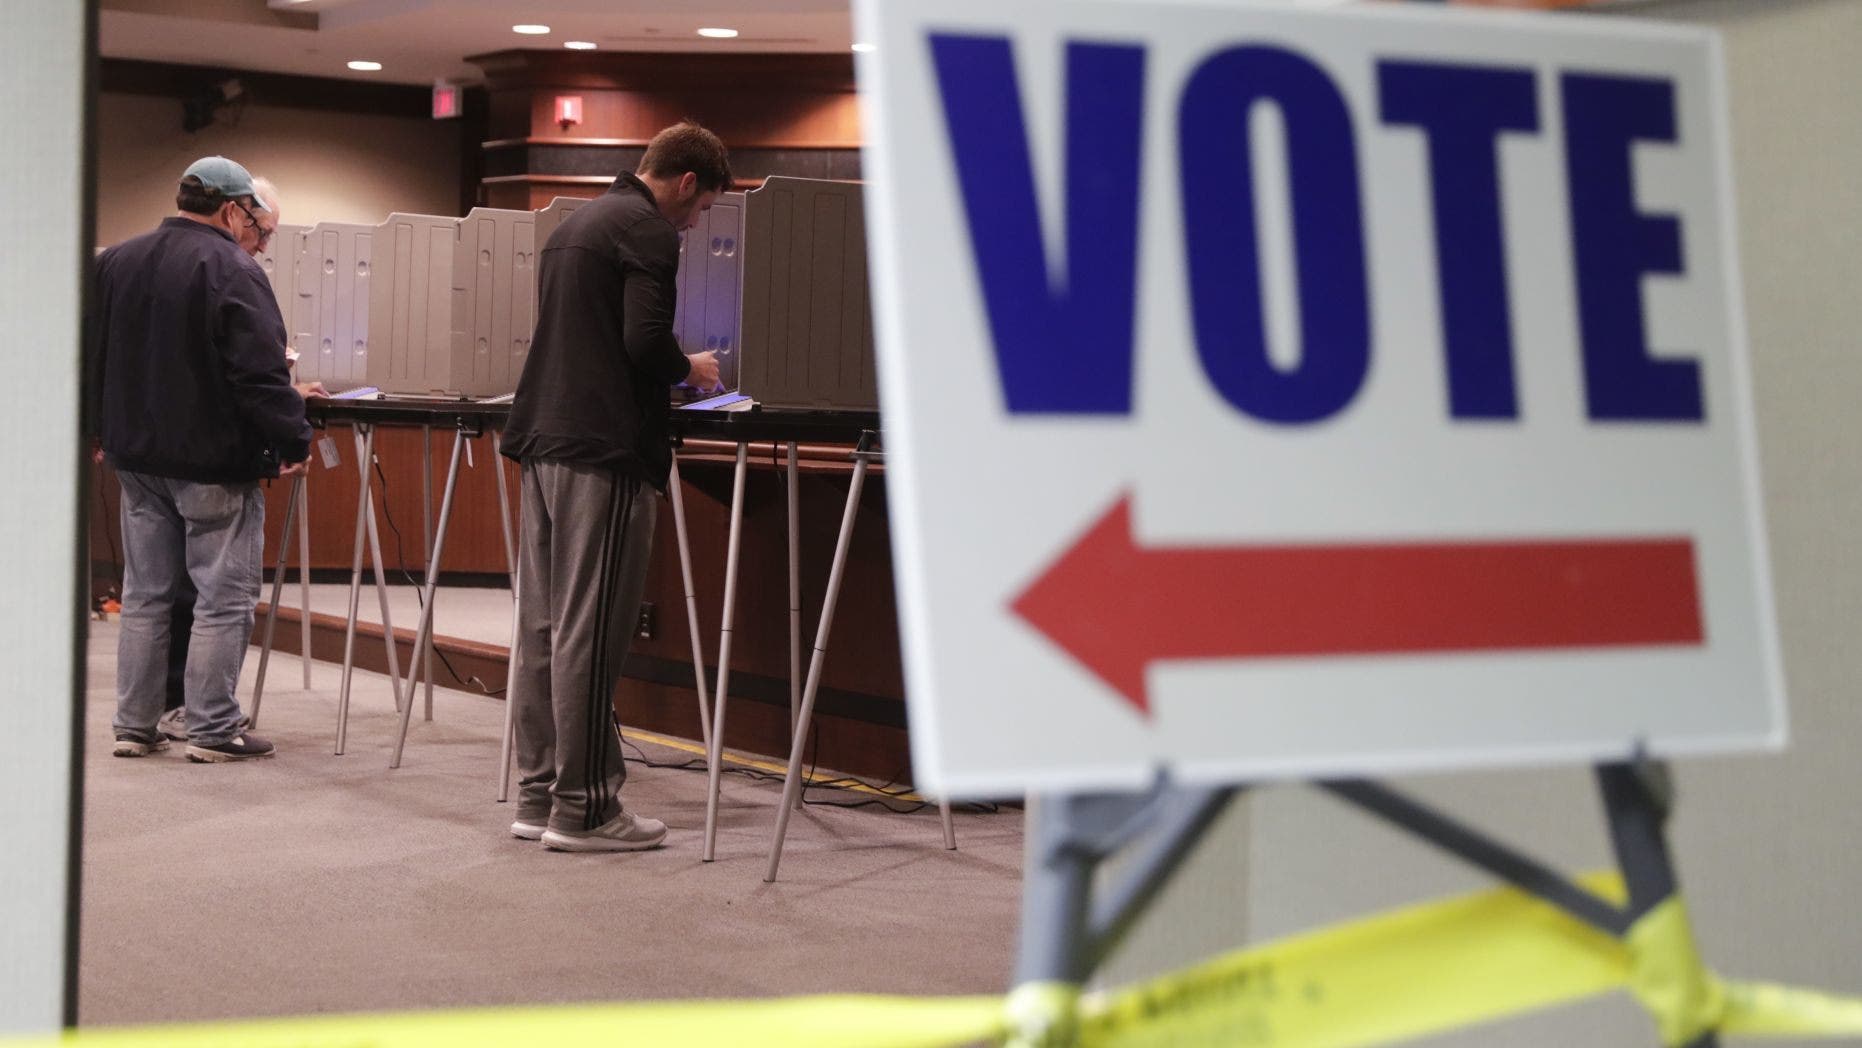 Colorado Dems look to ditch Electoral College system